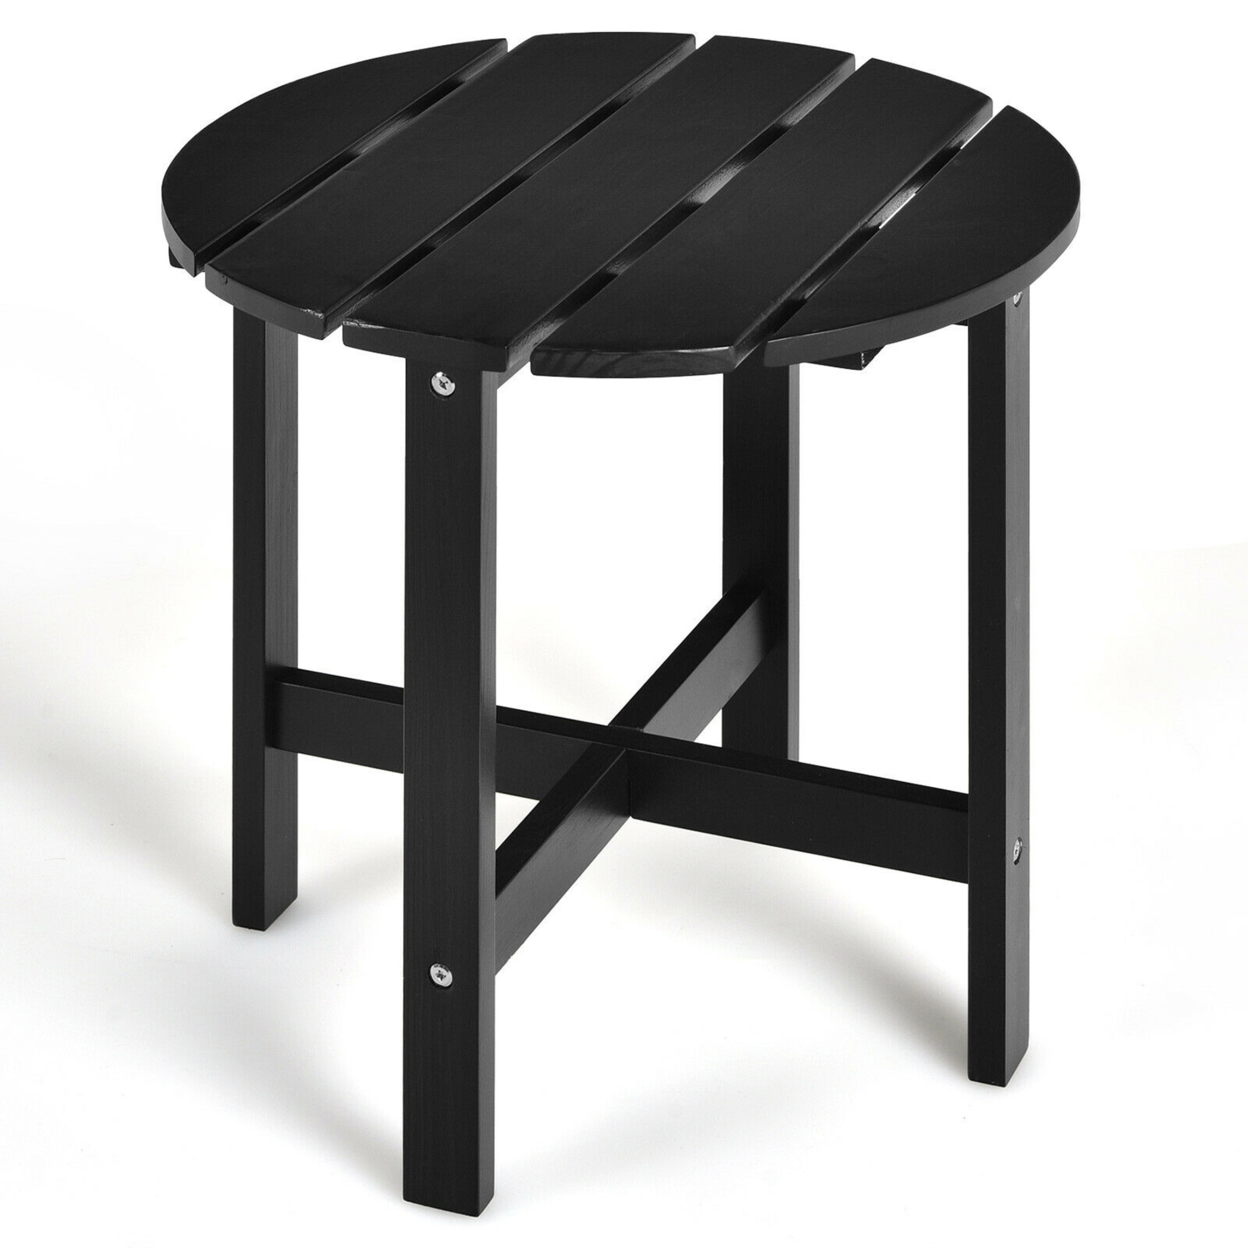 18'' Patio Round Side End Coffee Table Wooden Slat Garden Deck - Black